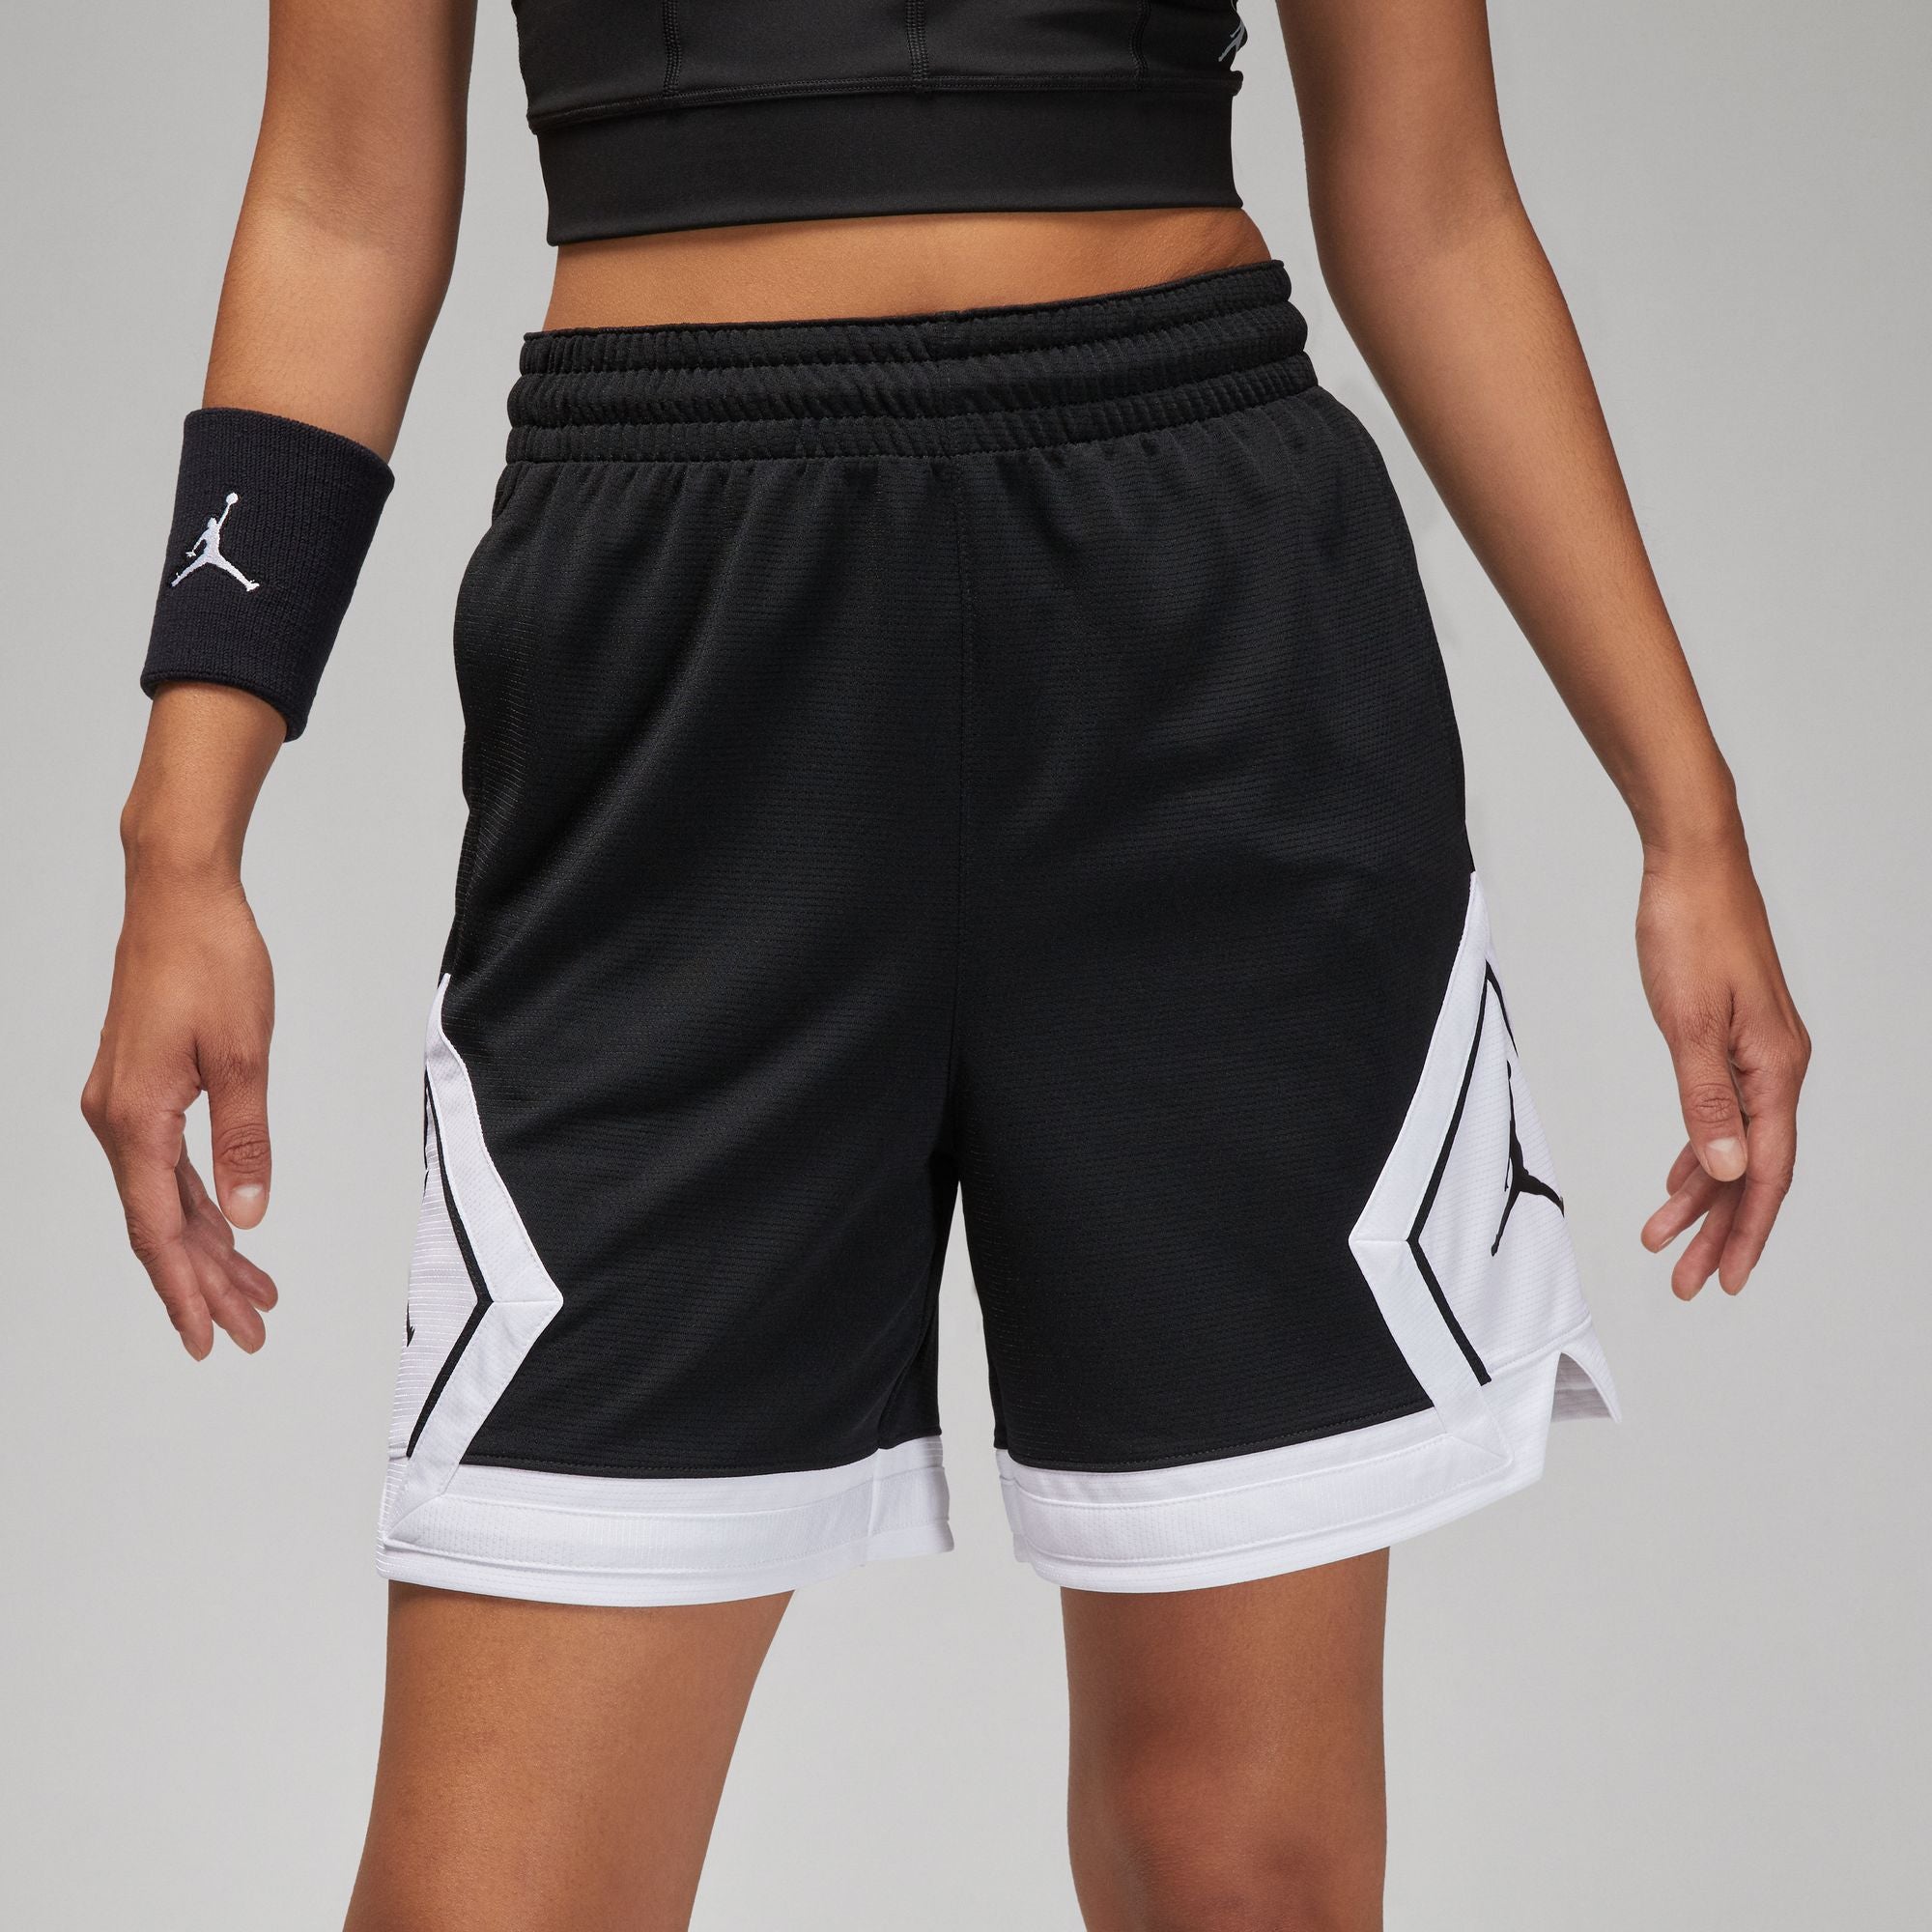 Womens Jordan Sport Shorts 'Black'